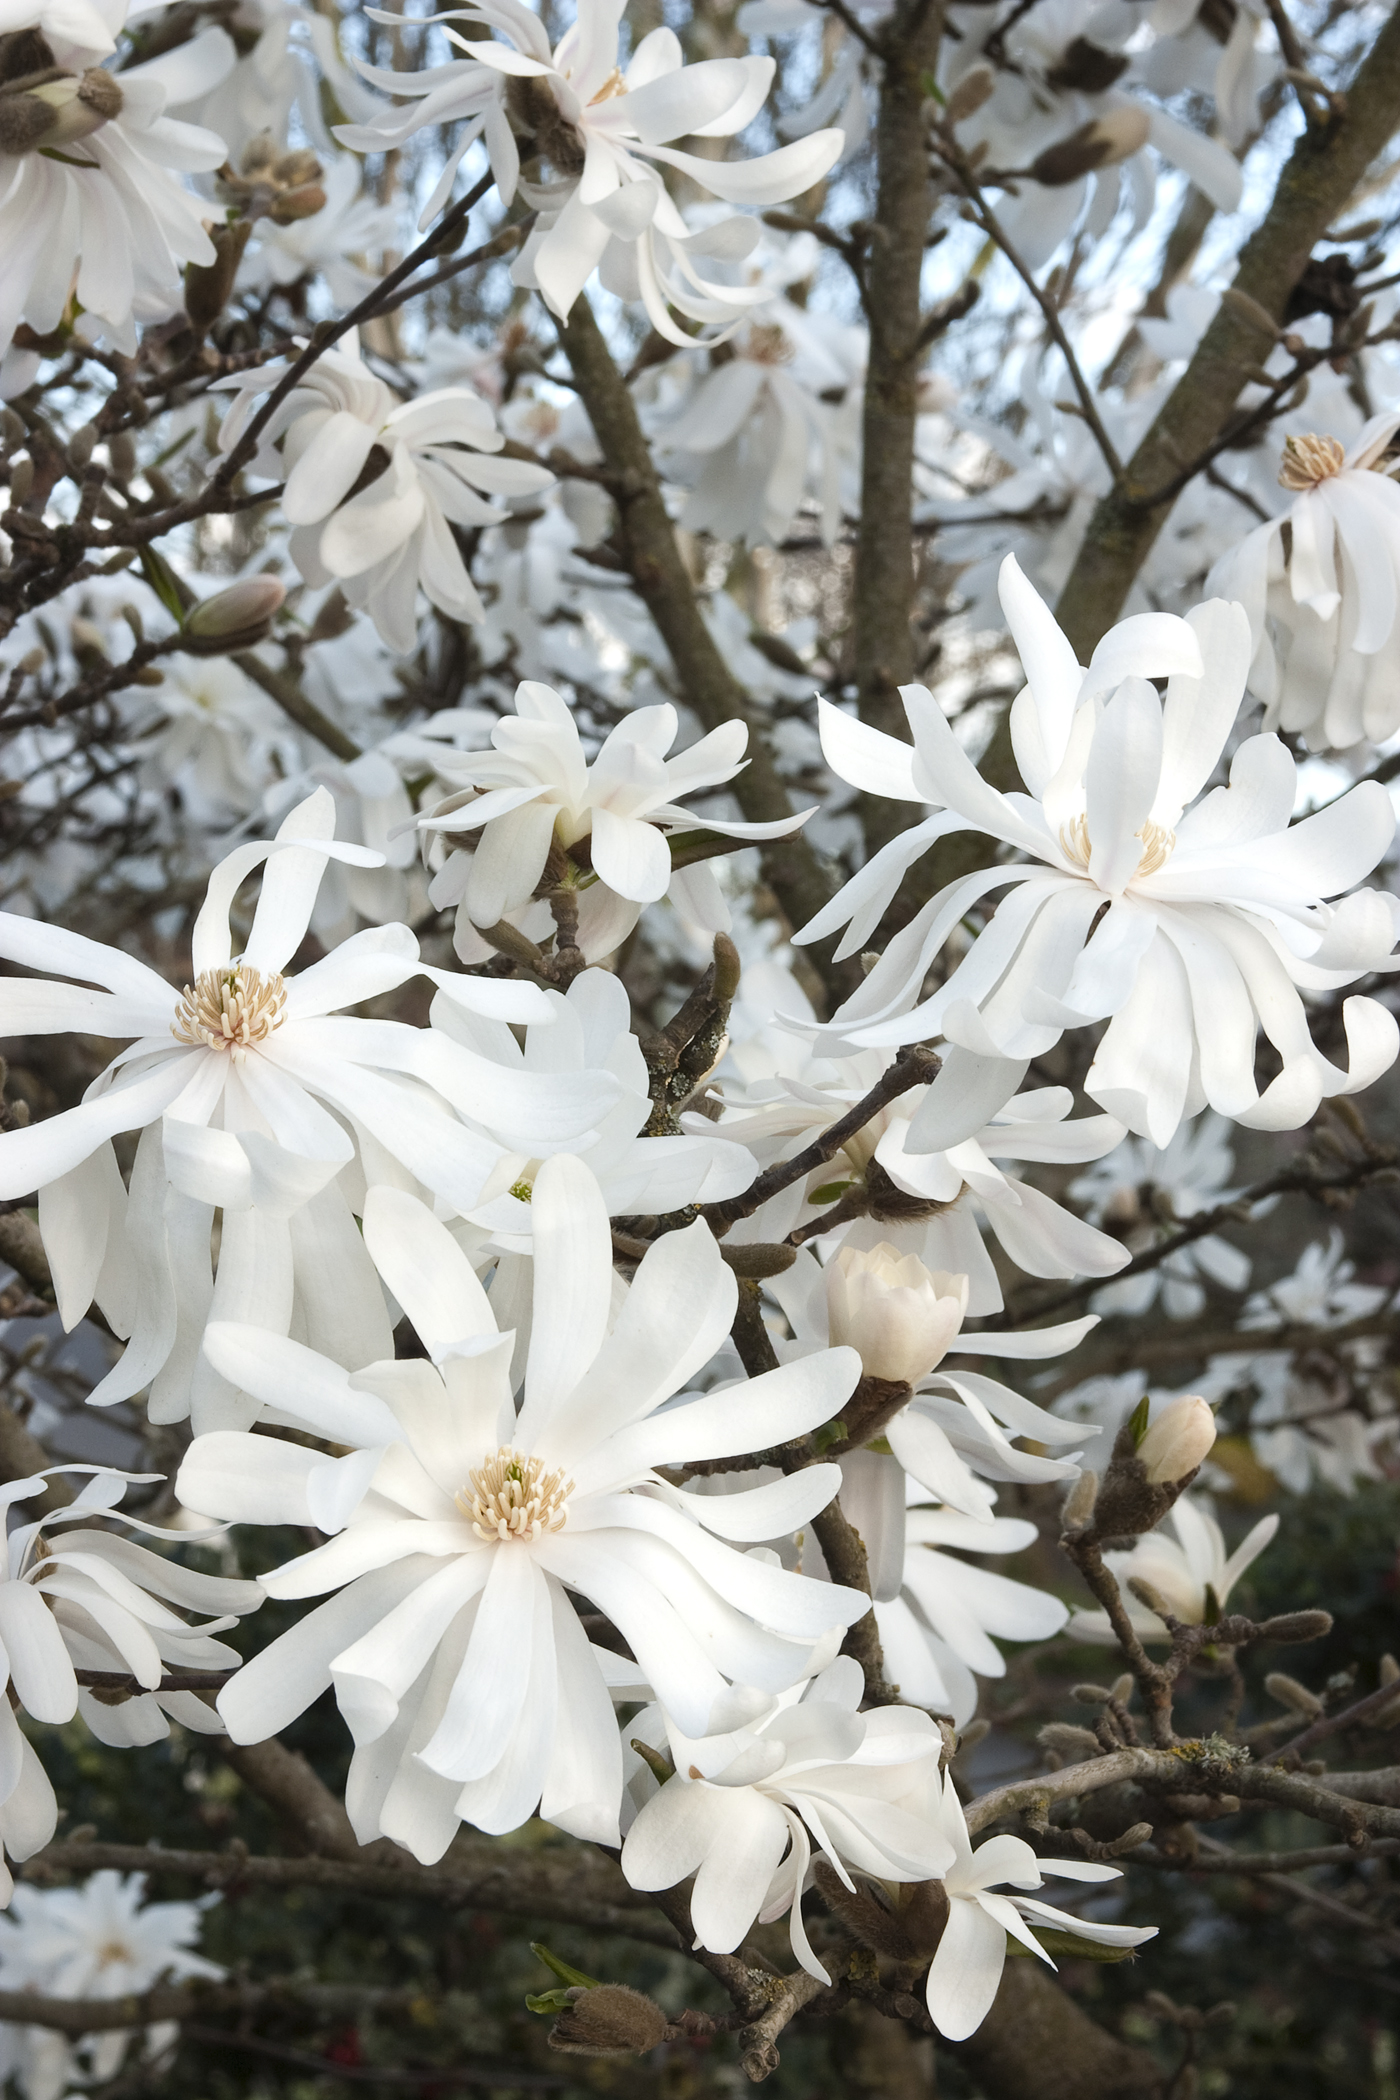 Star magnolia photo